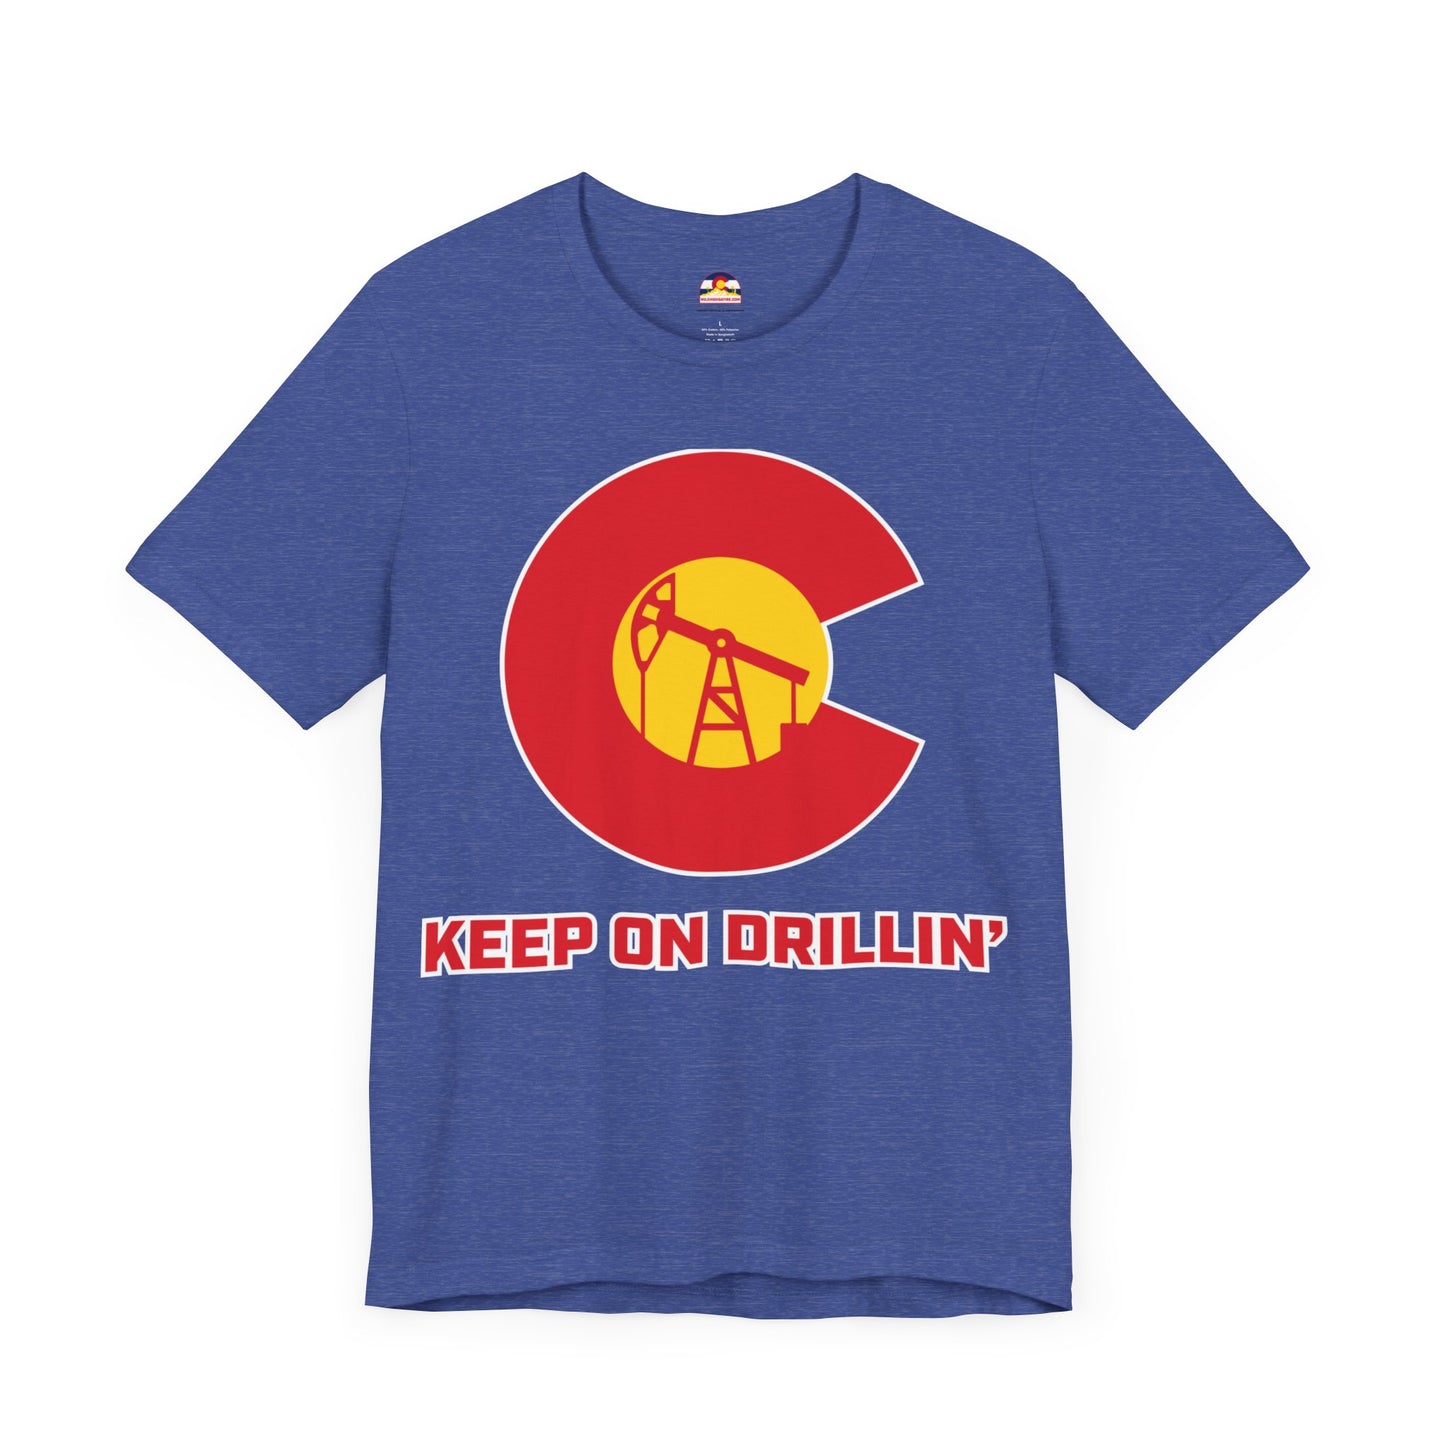 Keep On Drillin' T-Shirt